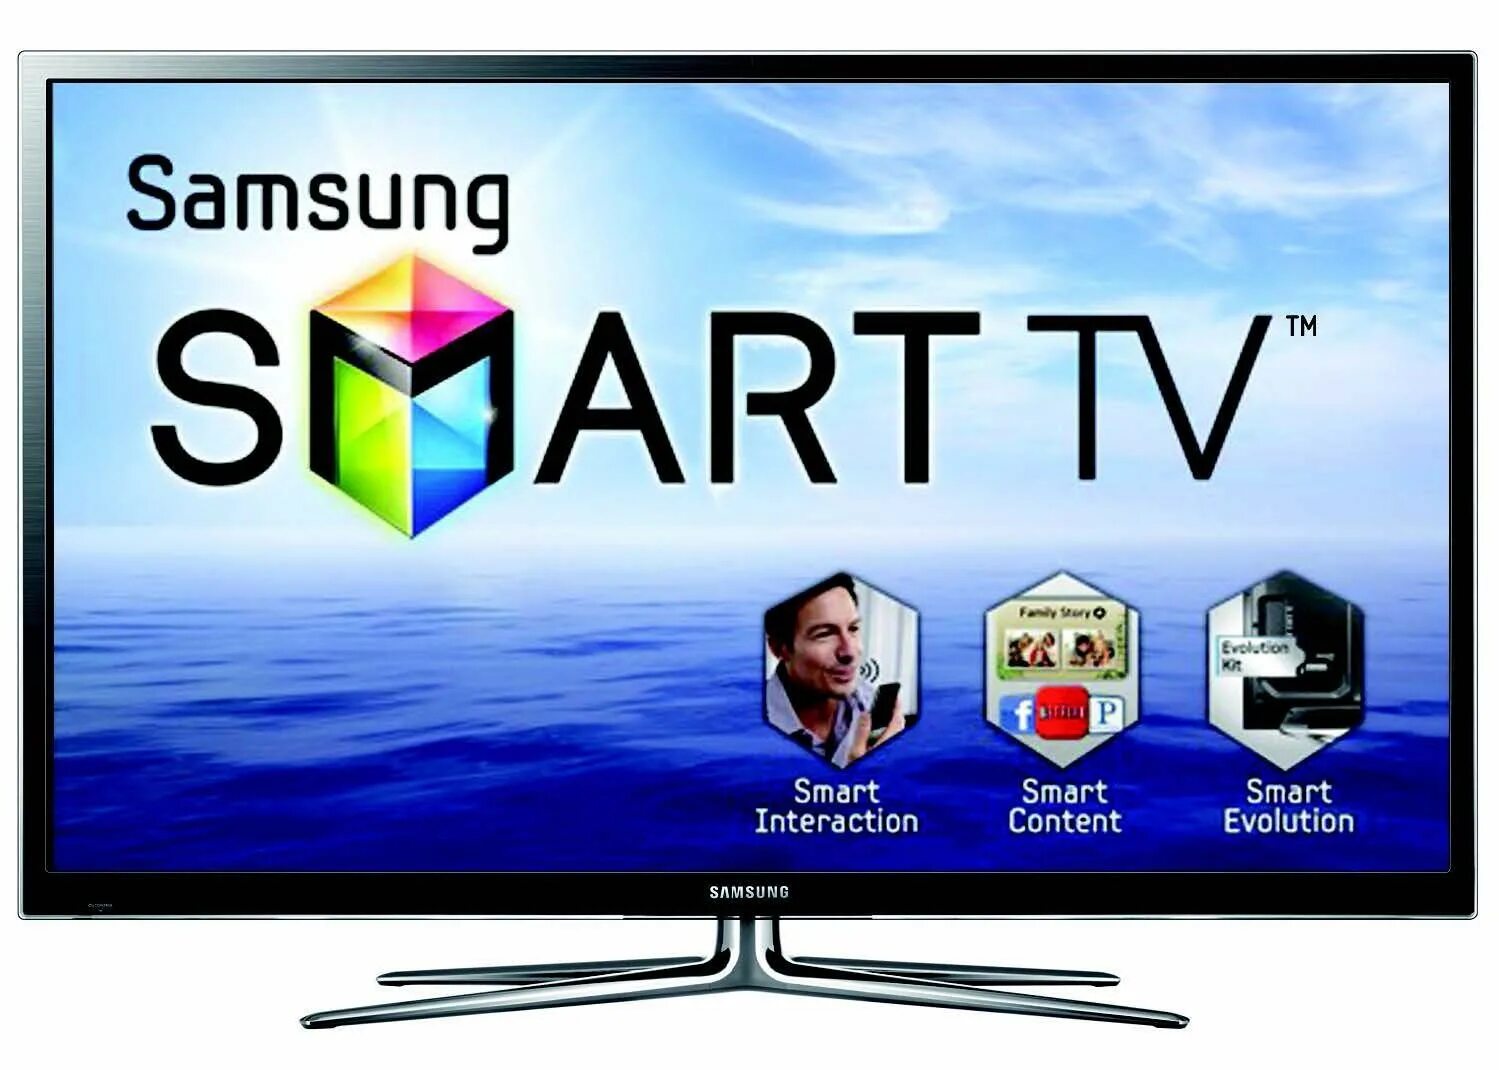 Смарт самсунг бесплатные каналы. Смарт ТВ Samsung. Телевизор Samsung Smart TV. Телевизор самсунг смарт ТВ 60. Samsung Smart TV 2012.